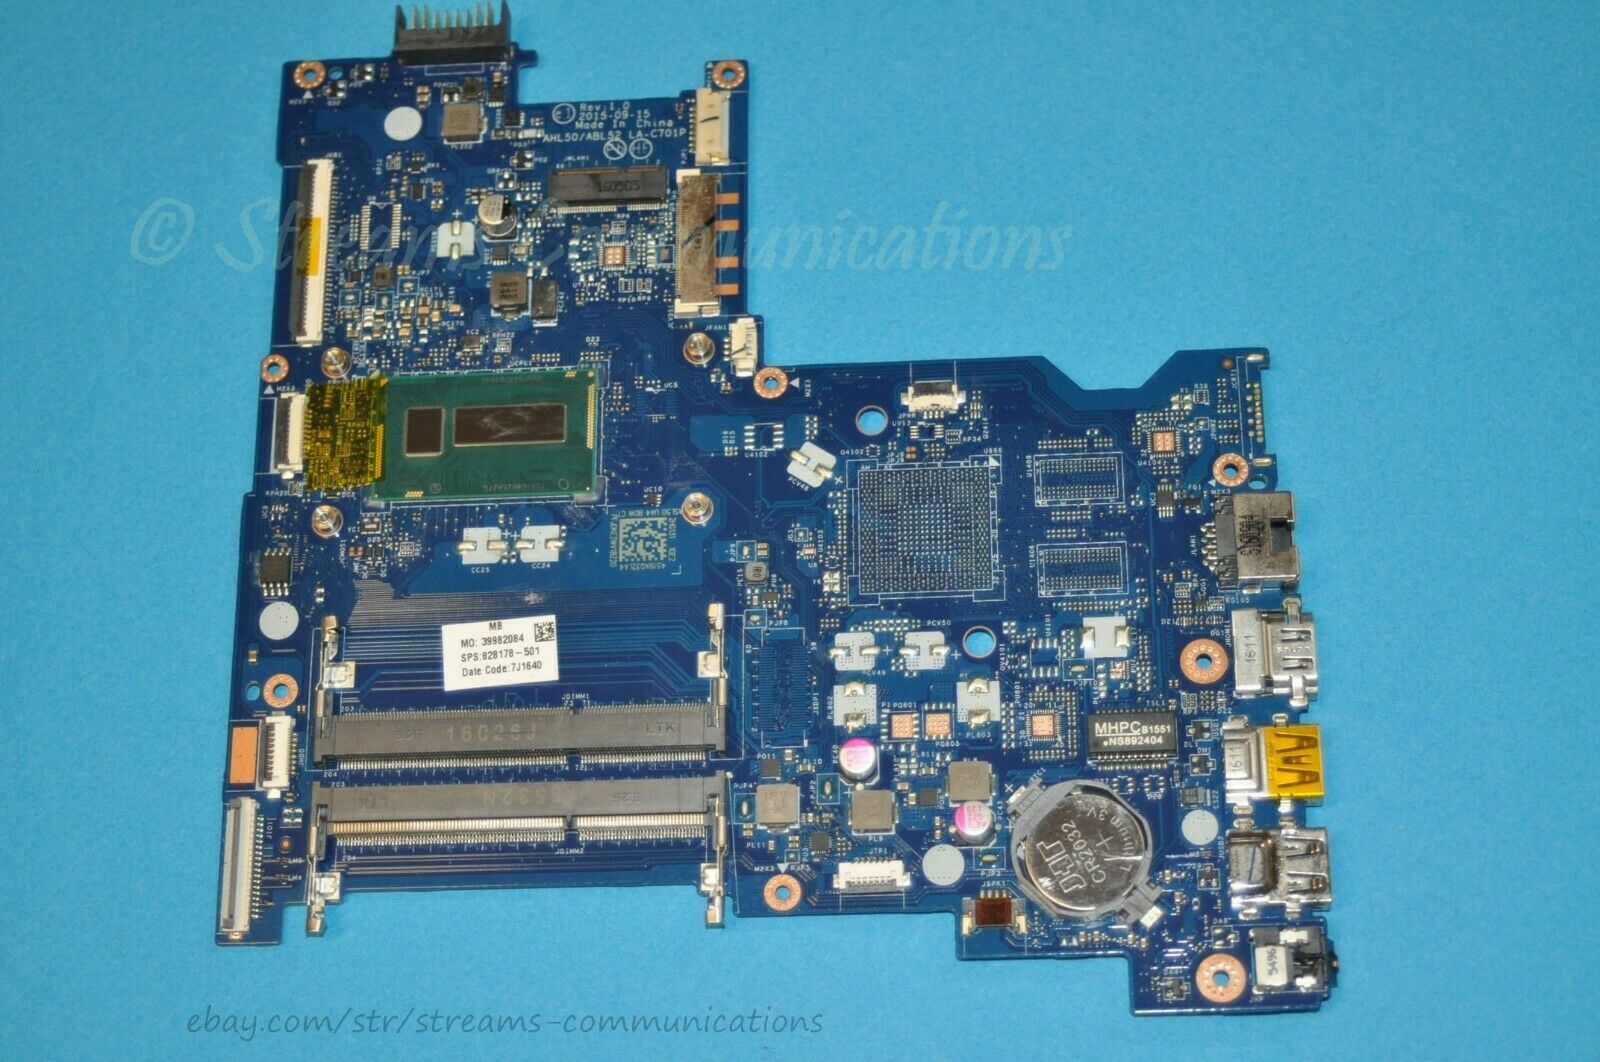 509450-001 for HP DV6 DV6-1200 Series AMD motherboard,ATI Radeon HD4650 Grade A